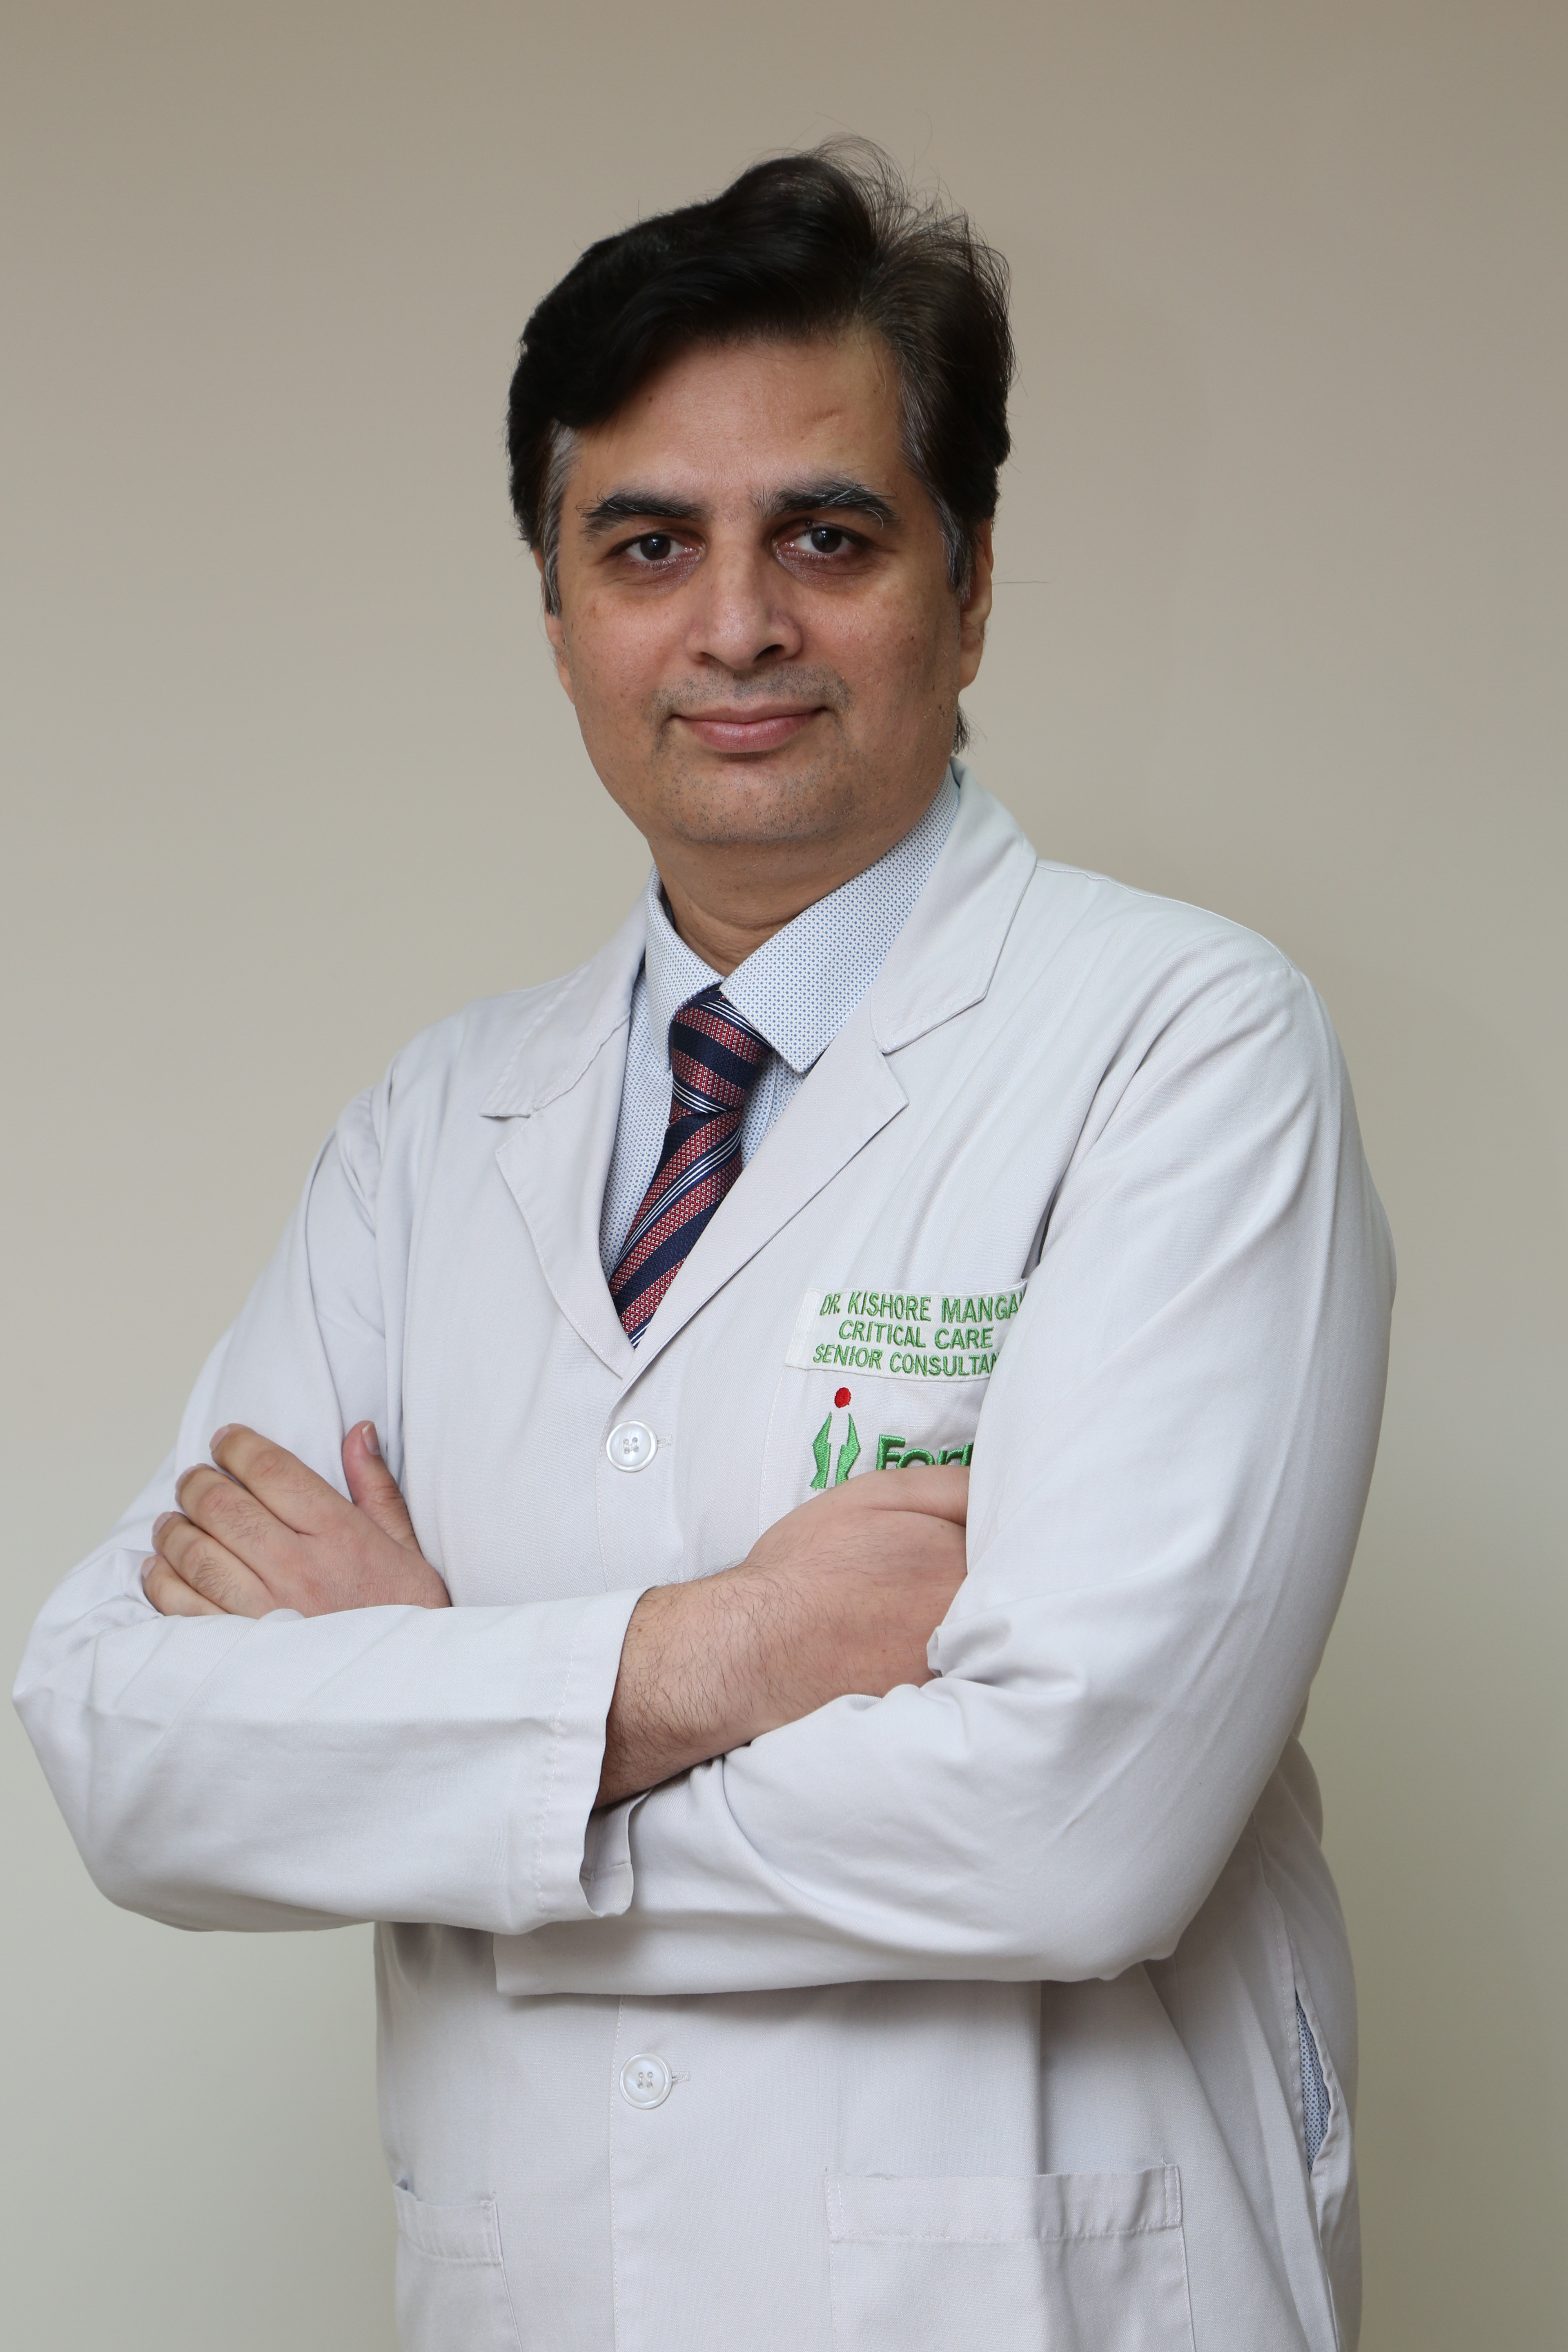 Dr. Kishore Mangal